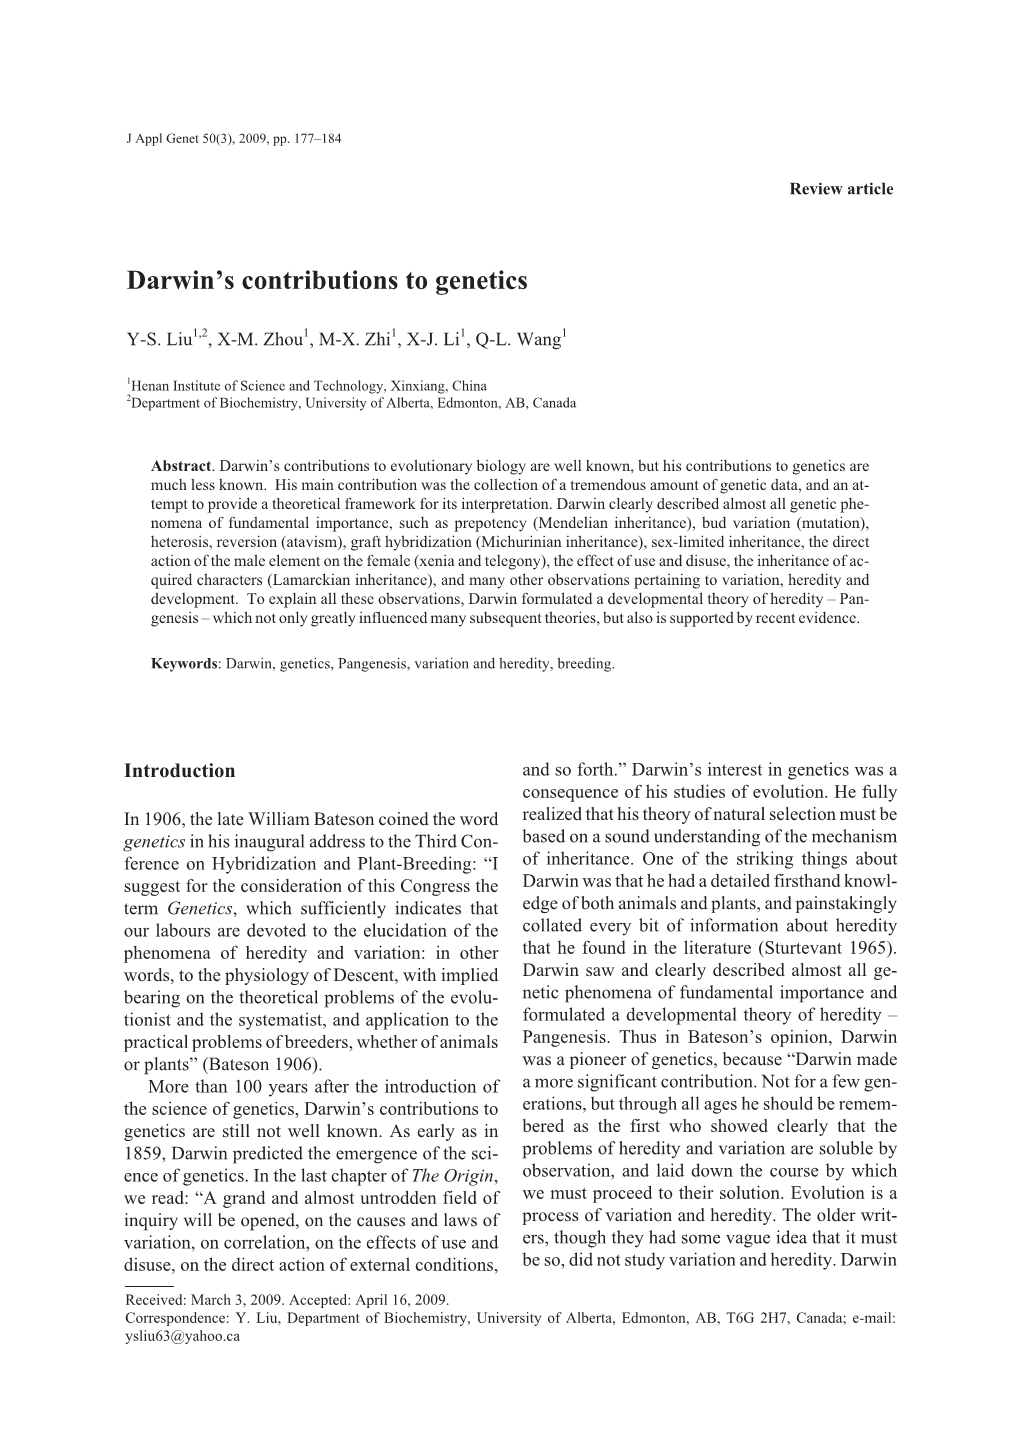 Darwin's Contributions to Genetics